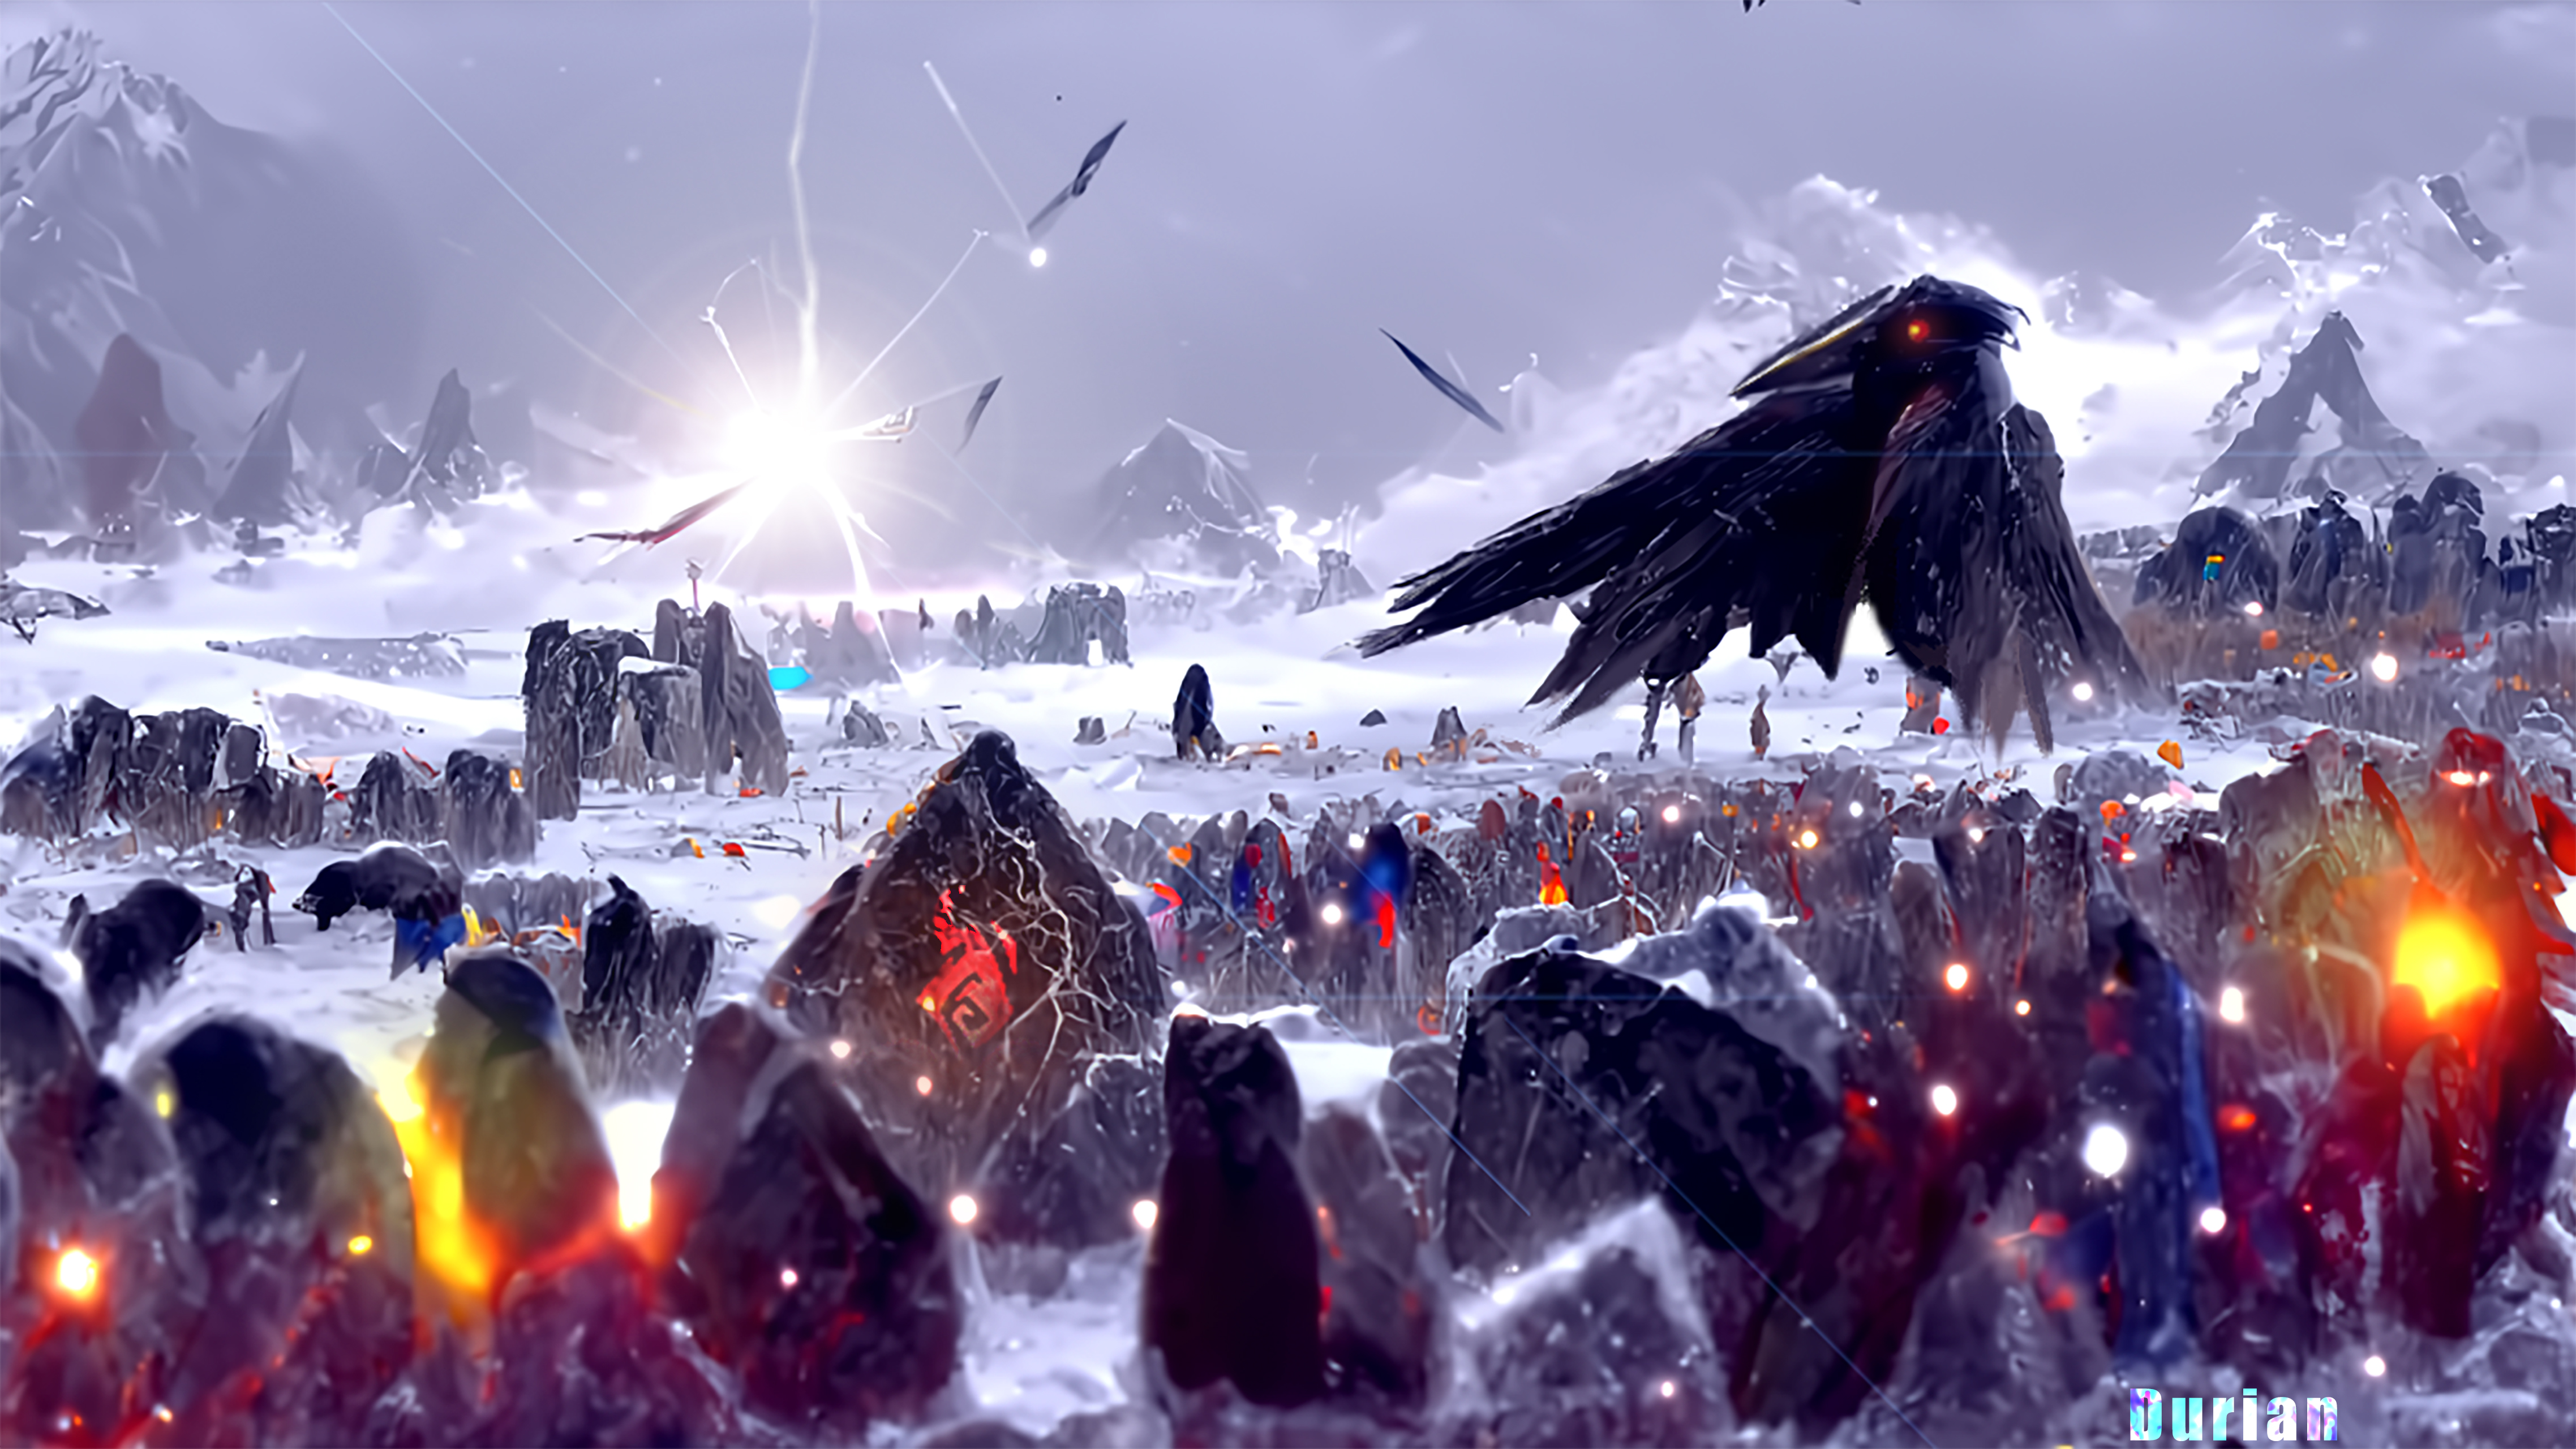 Magic Stonehenge Crow Lightning Ceremony Colorful 4552x2560